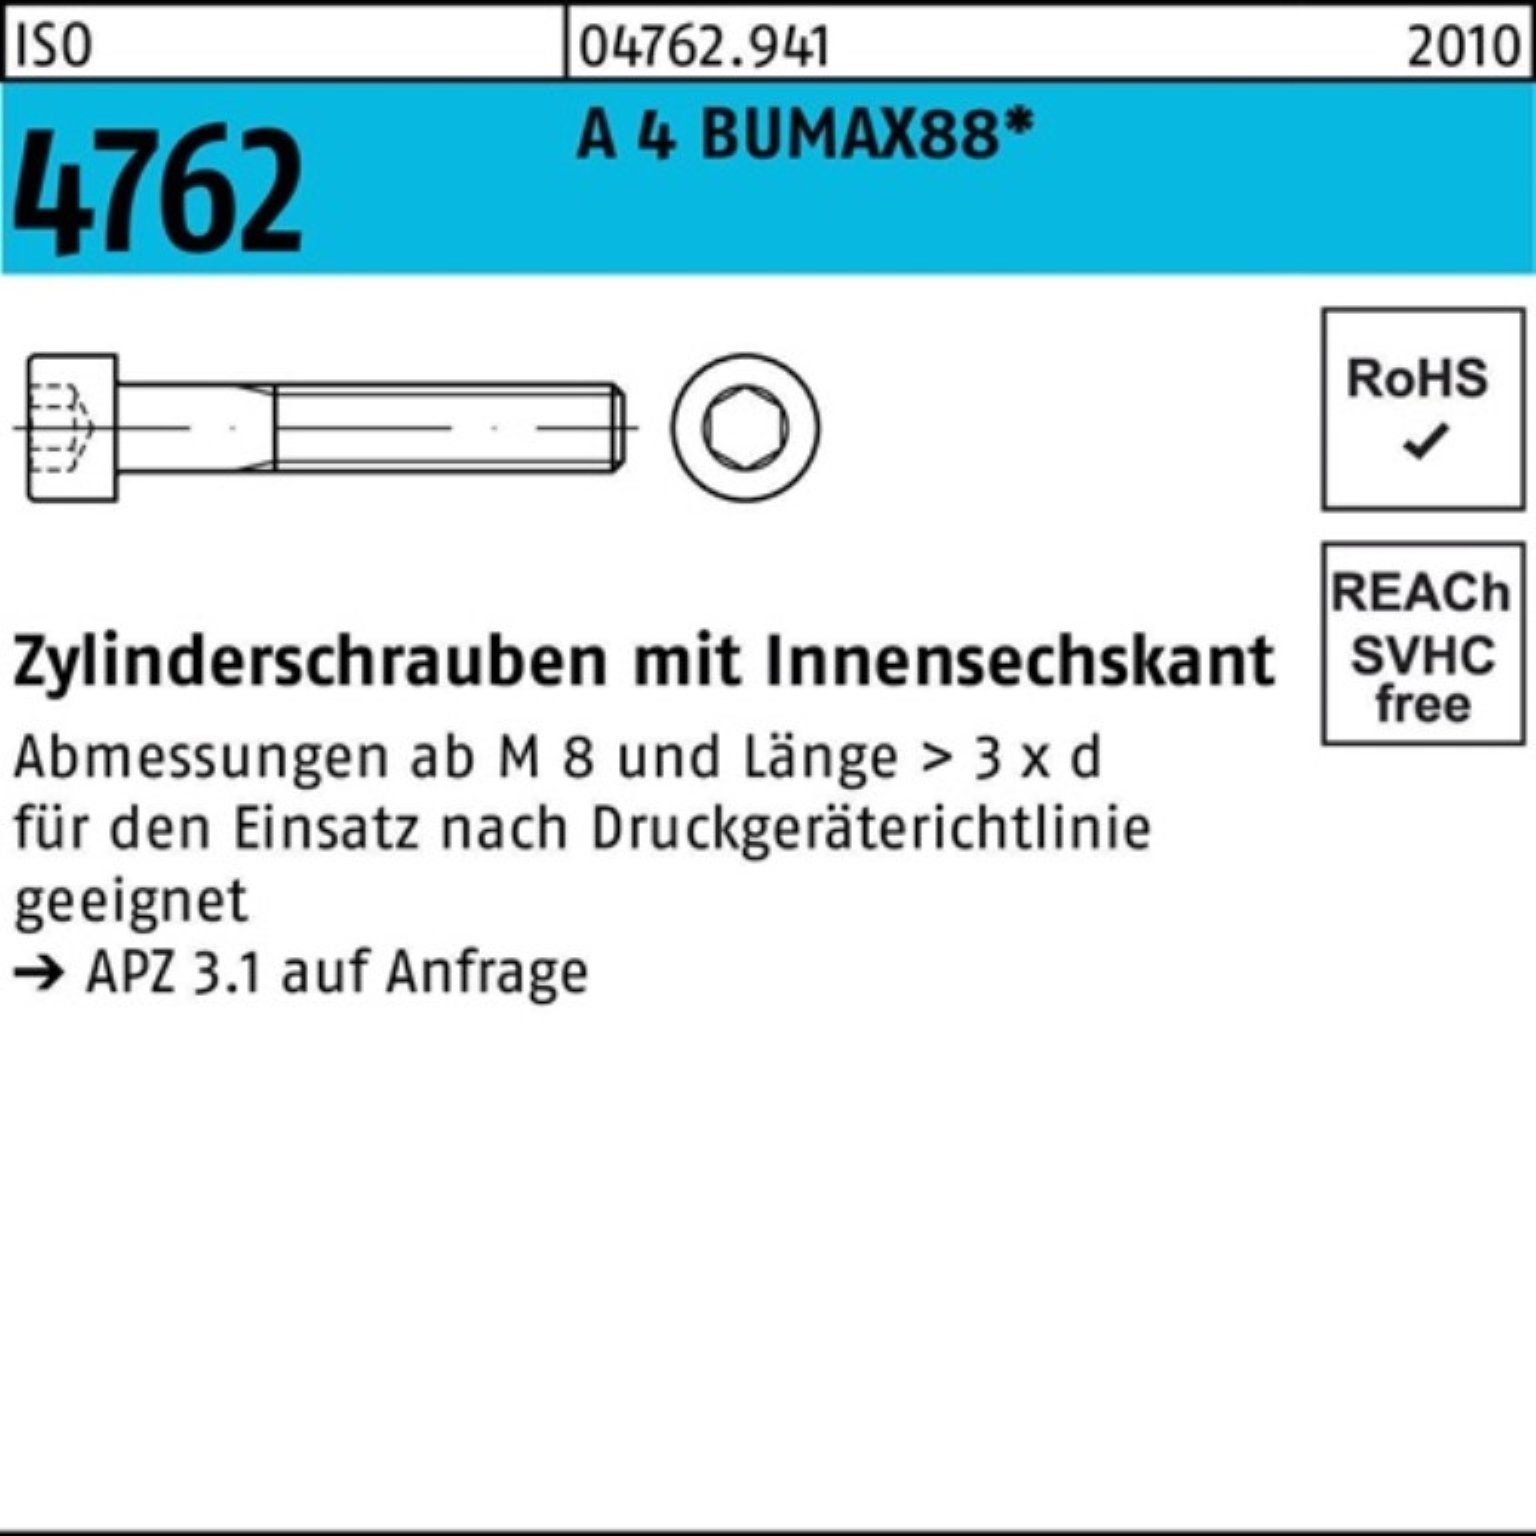 Bufab Zylinderschraube 100er Pack Zylinderschraube ISO 4762 Innen-6kt M5x 25 A 4 BUMAX88 100